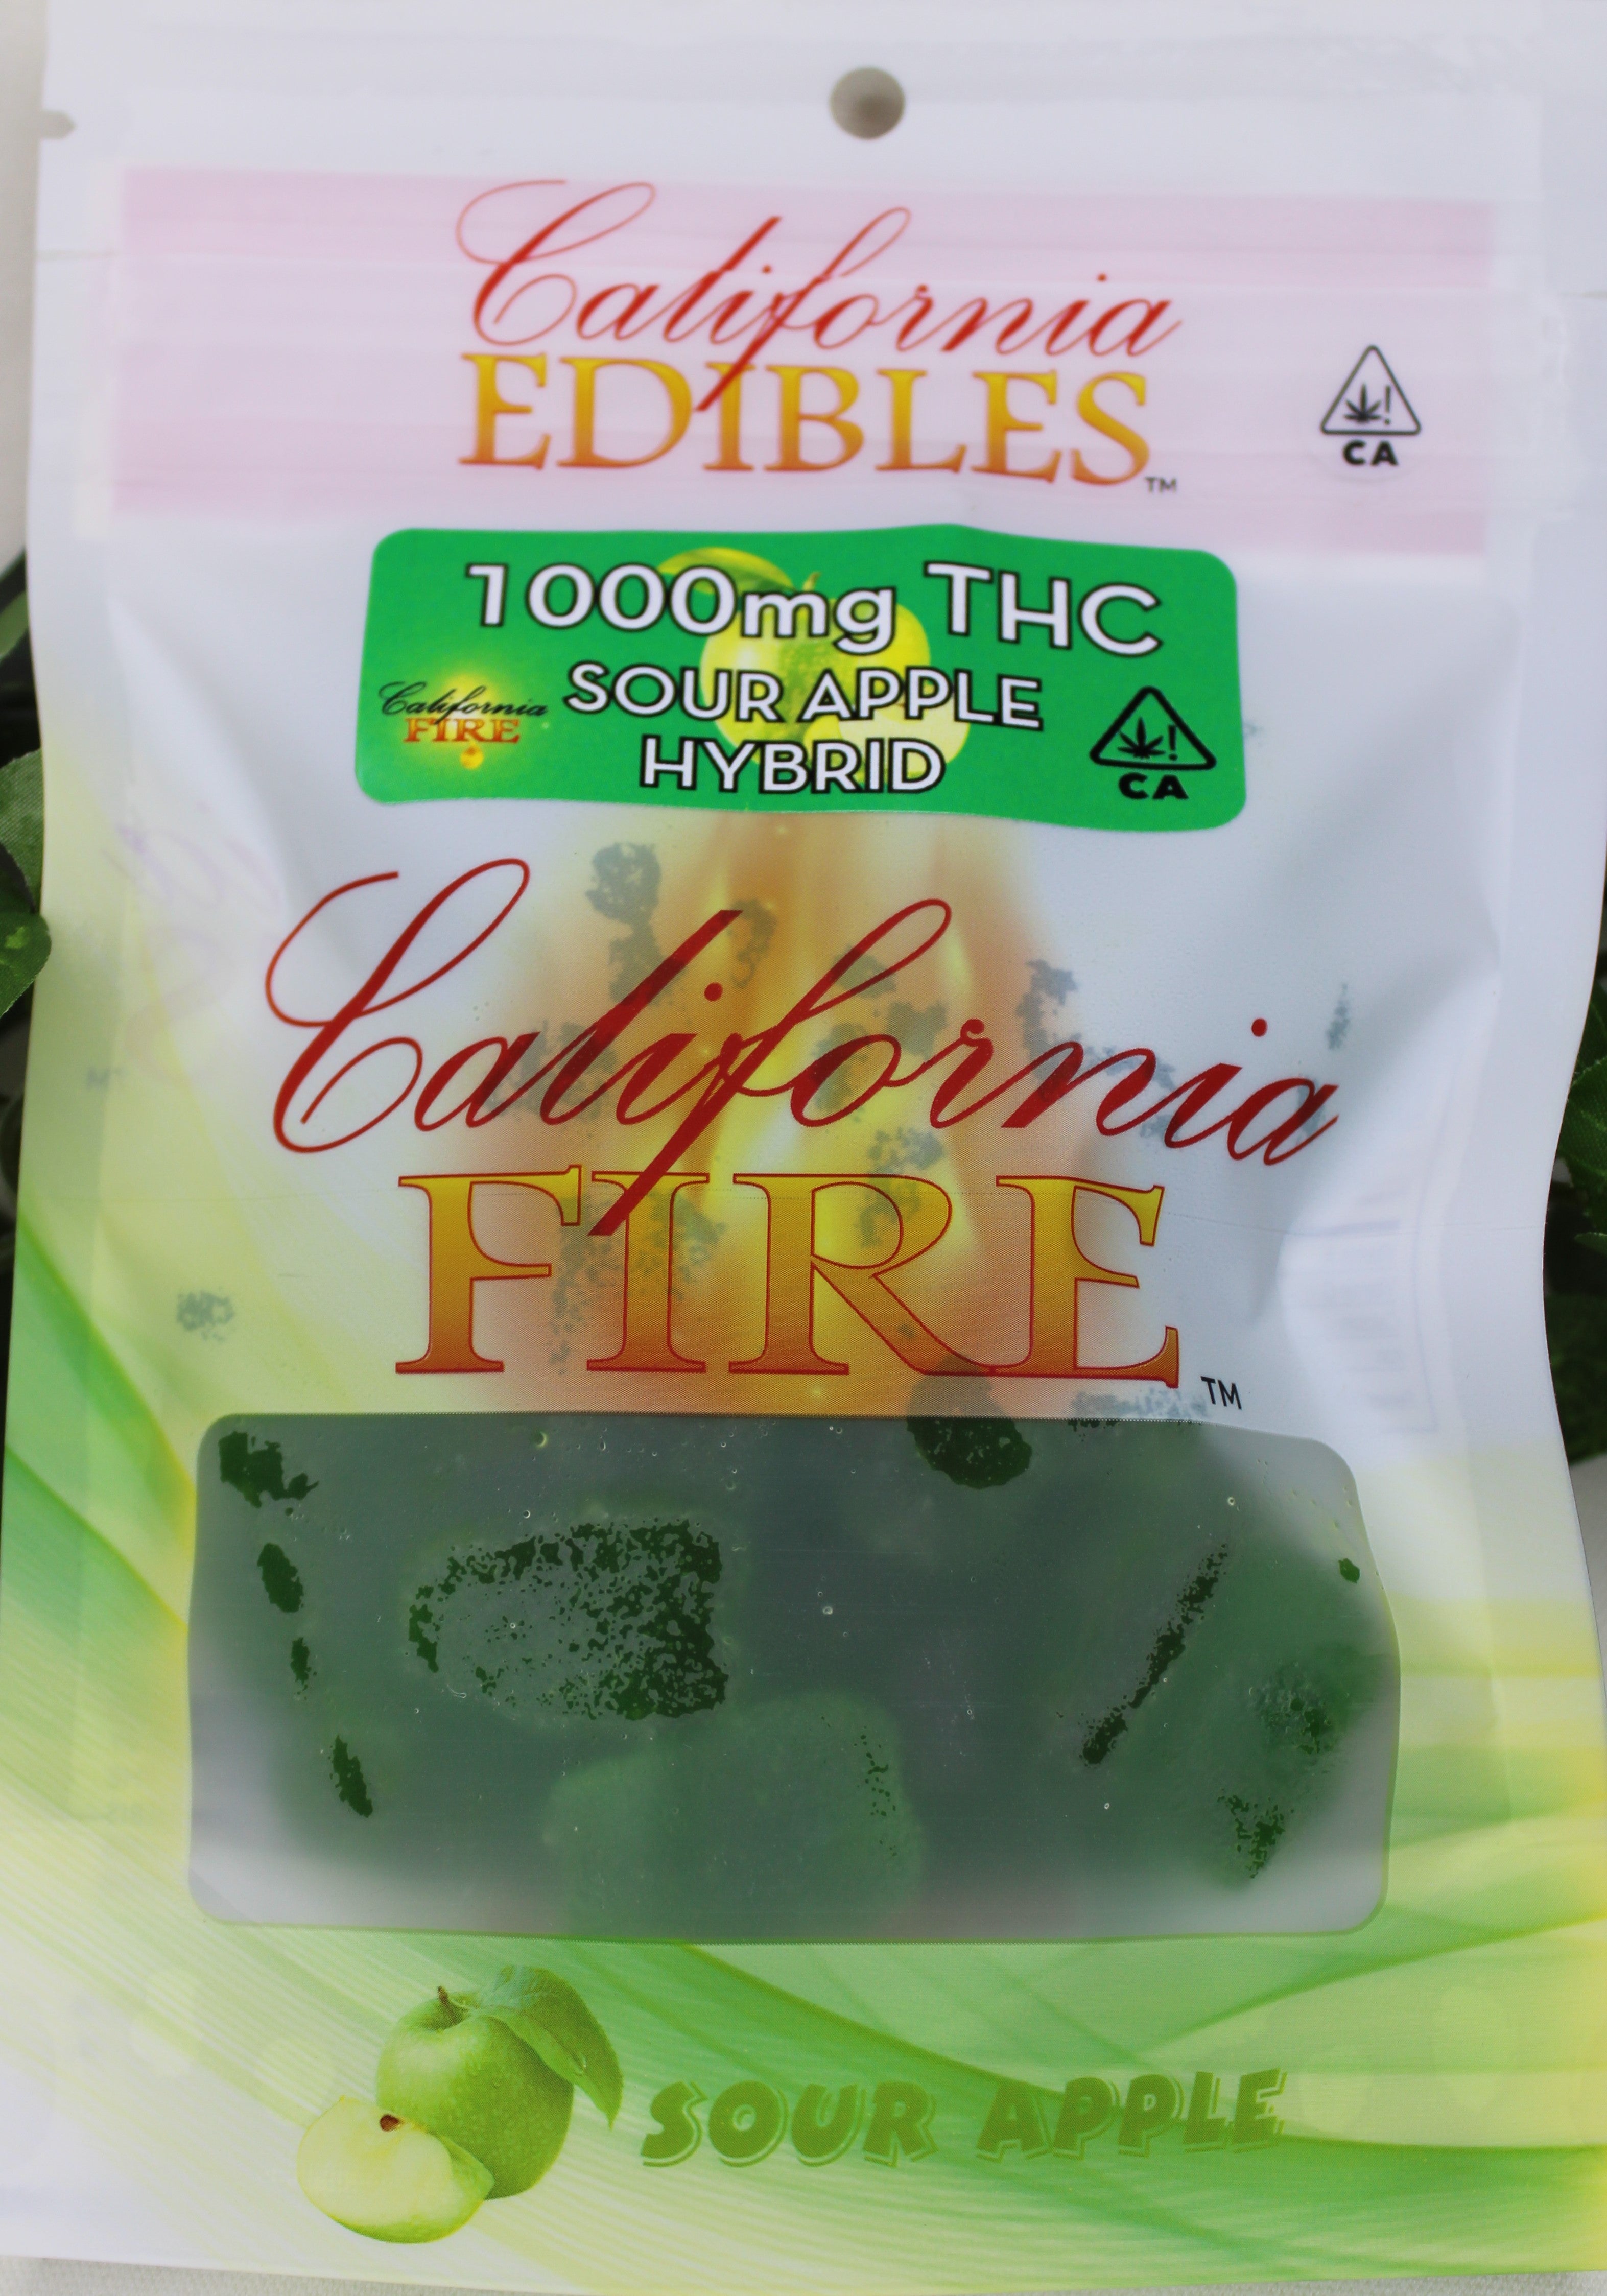 California Fire 1000mg "Sour Apple Hybrid" THC Edible